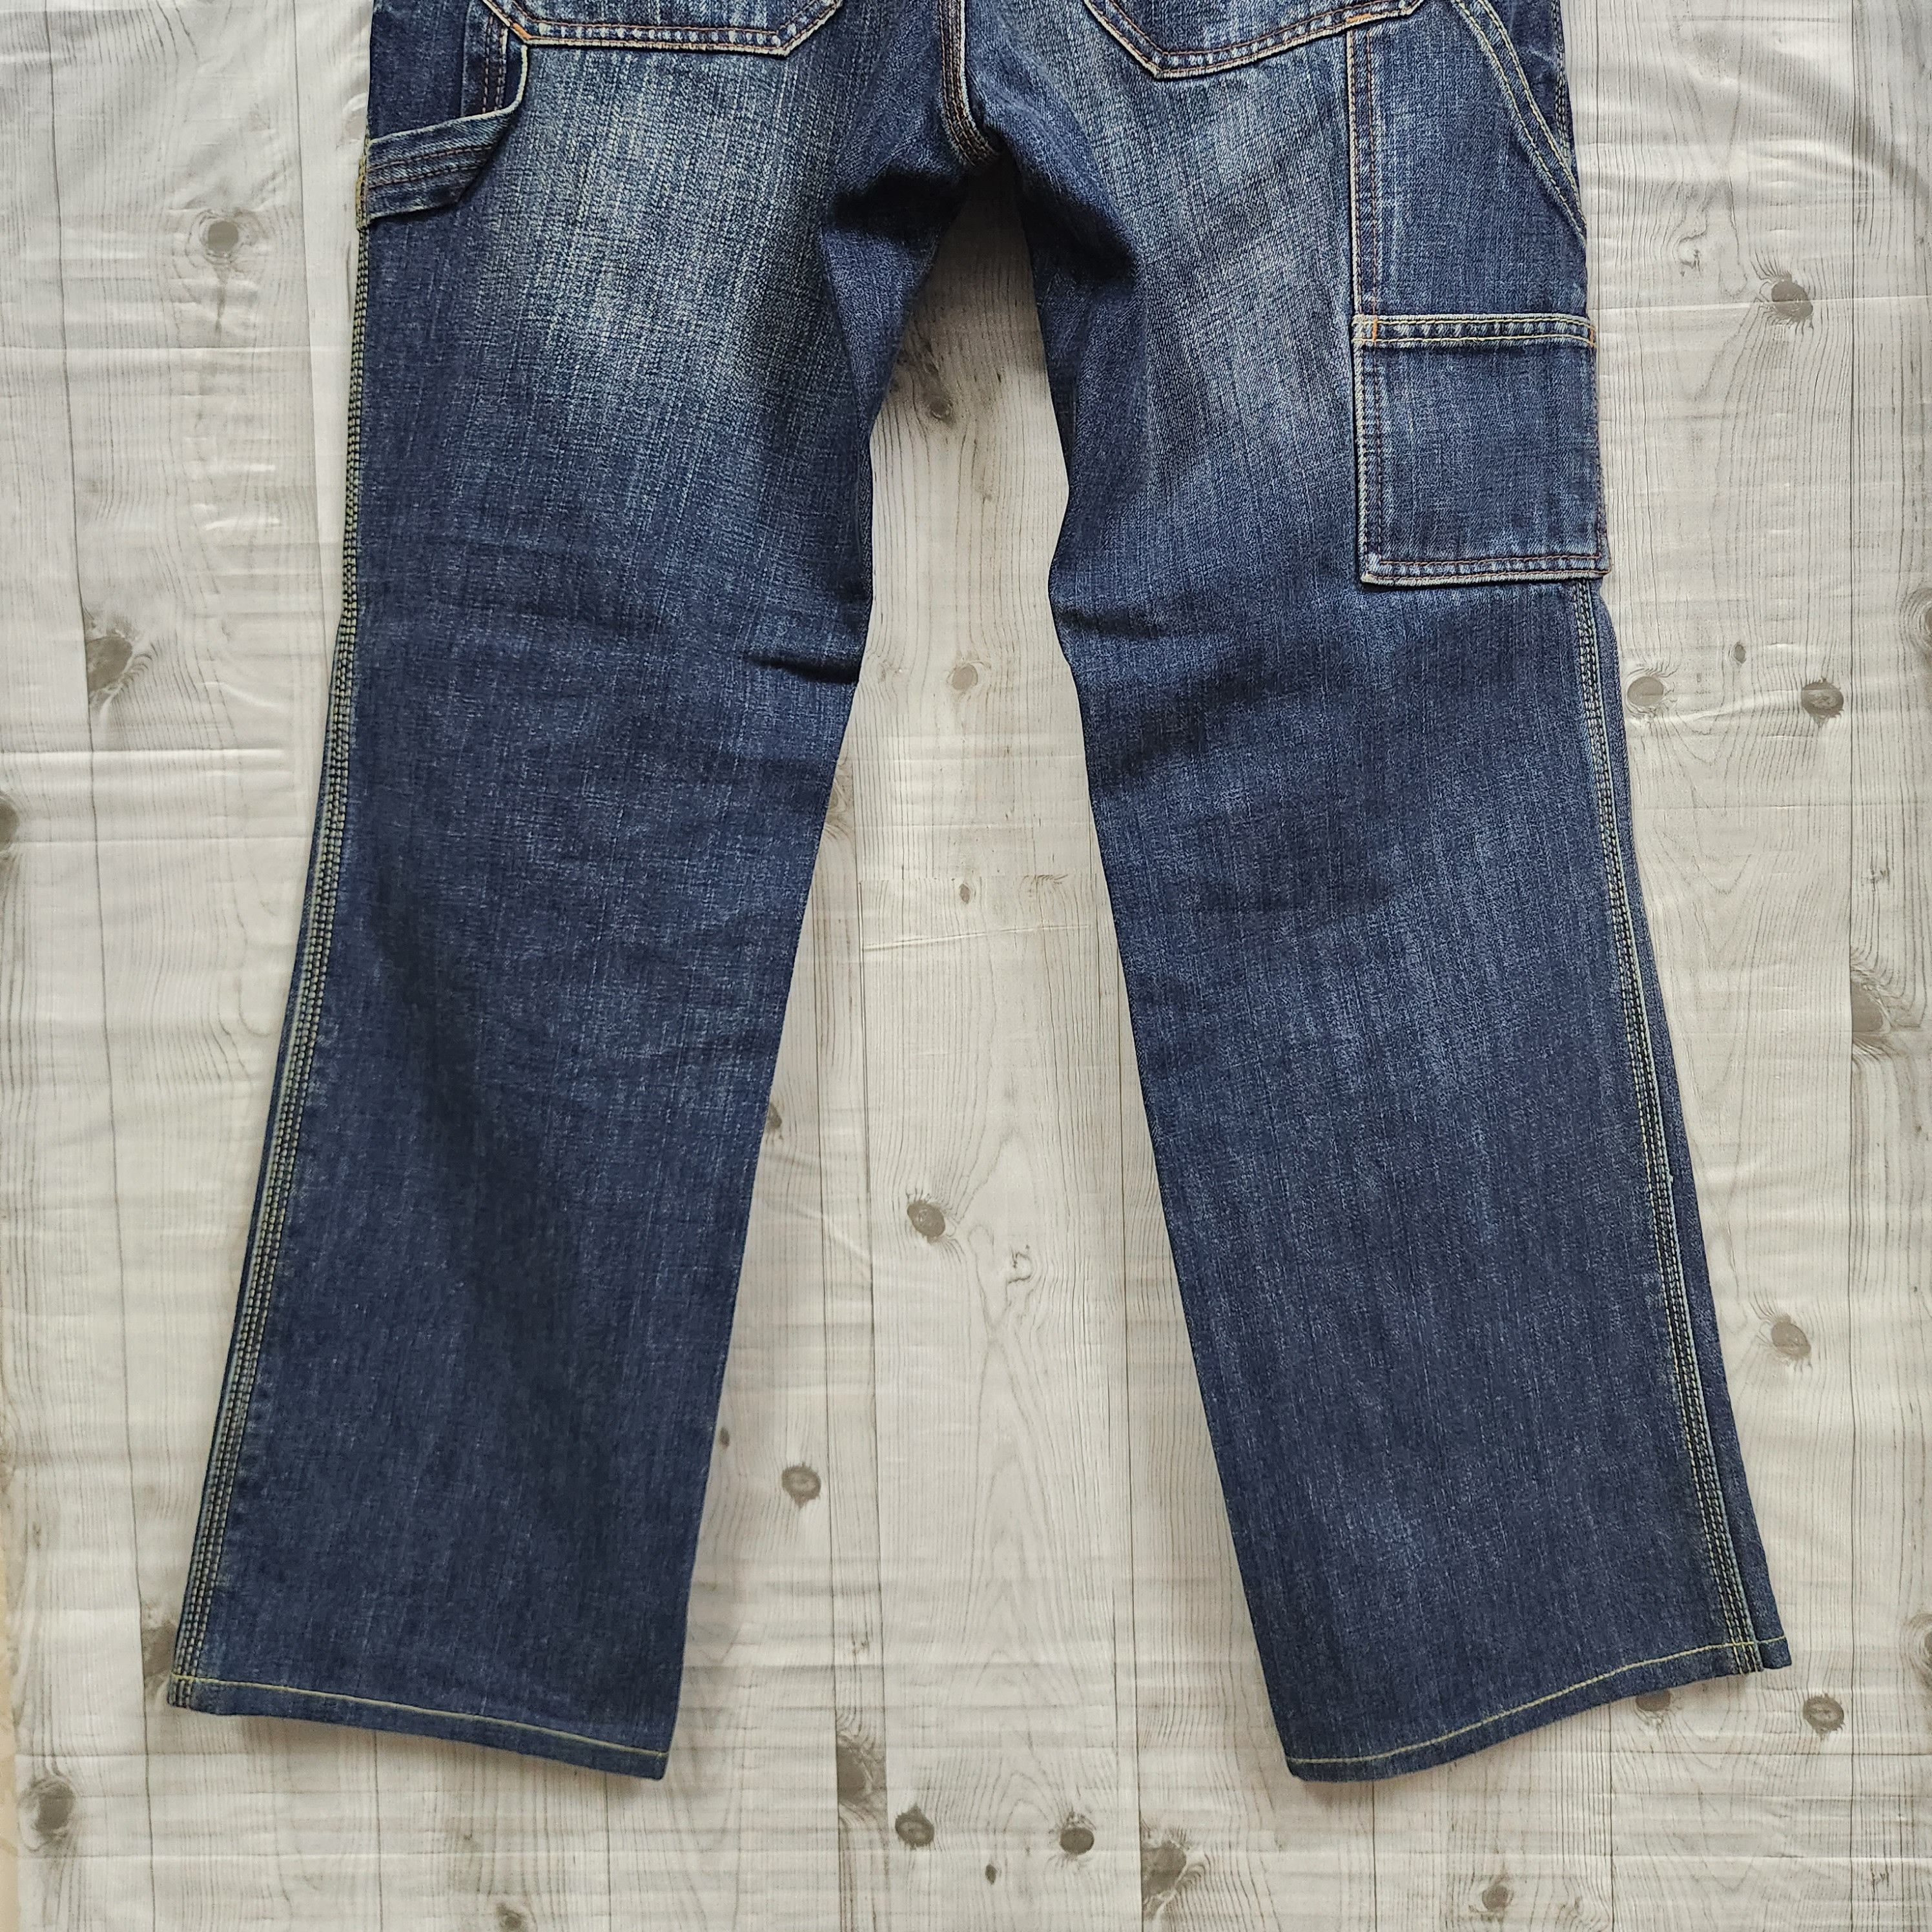 Global Work Denim Four Front Pockets Japanese Indigo Jeans - 14